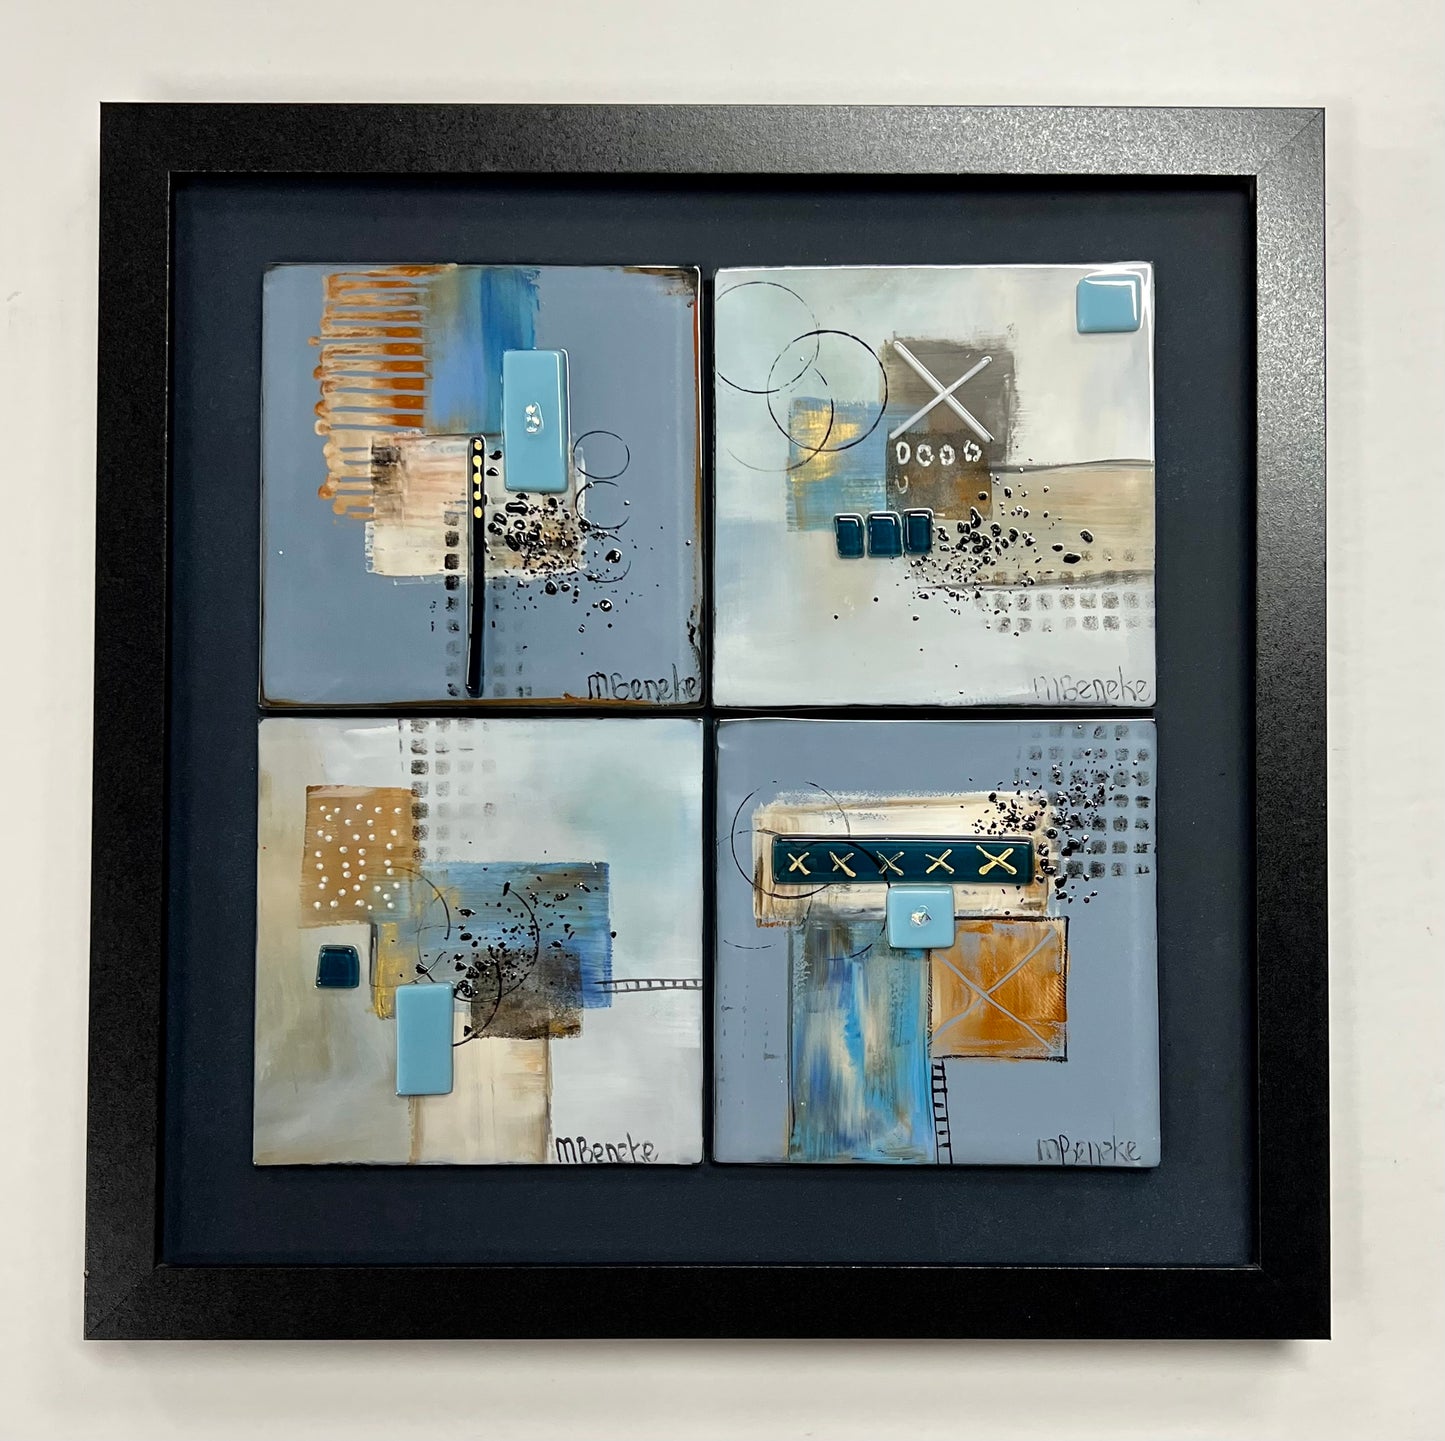 Marguerite Beneke - Gallery - 11" - 4 x 4x4" Tiles Wall Mounted